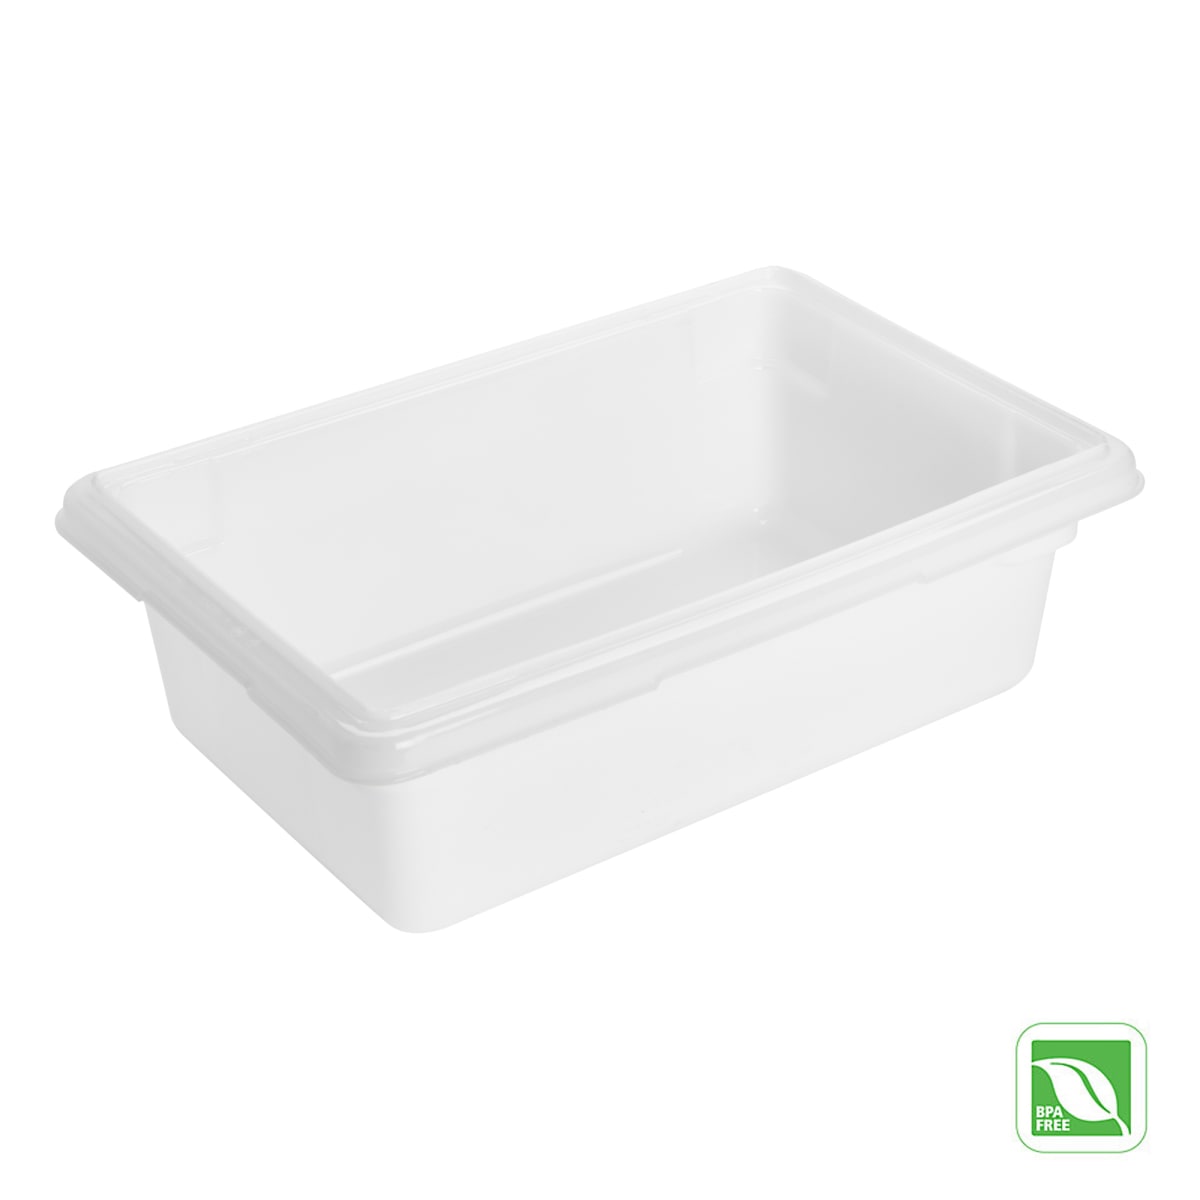 Rubbermaid FG350900WHT White Polyethylene Food Storage Box - 18 x